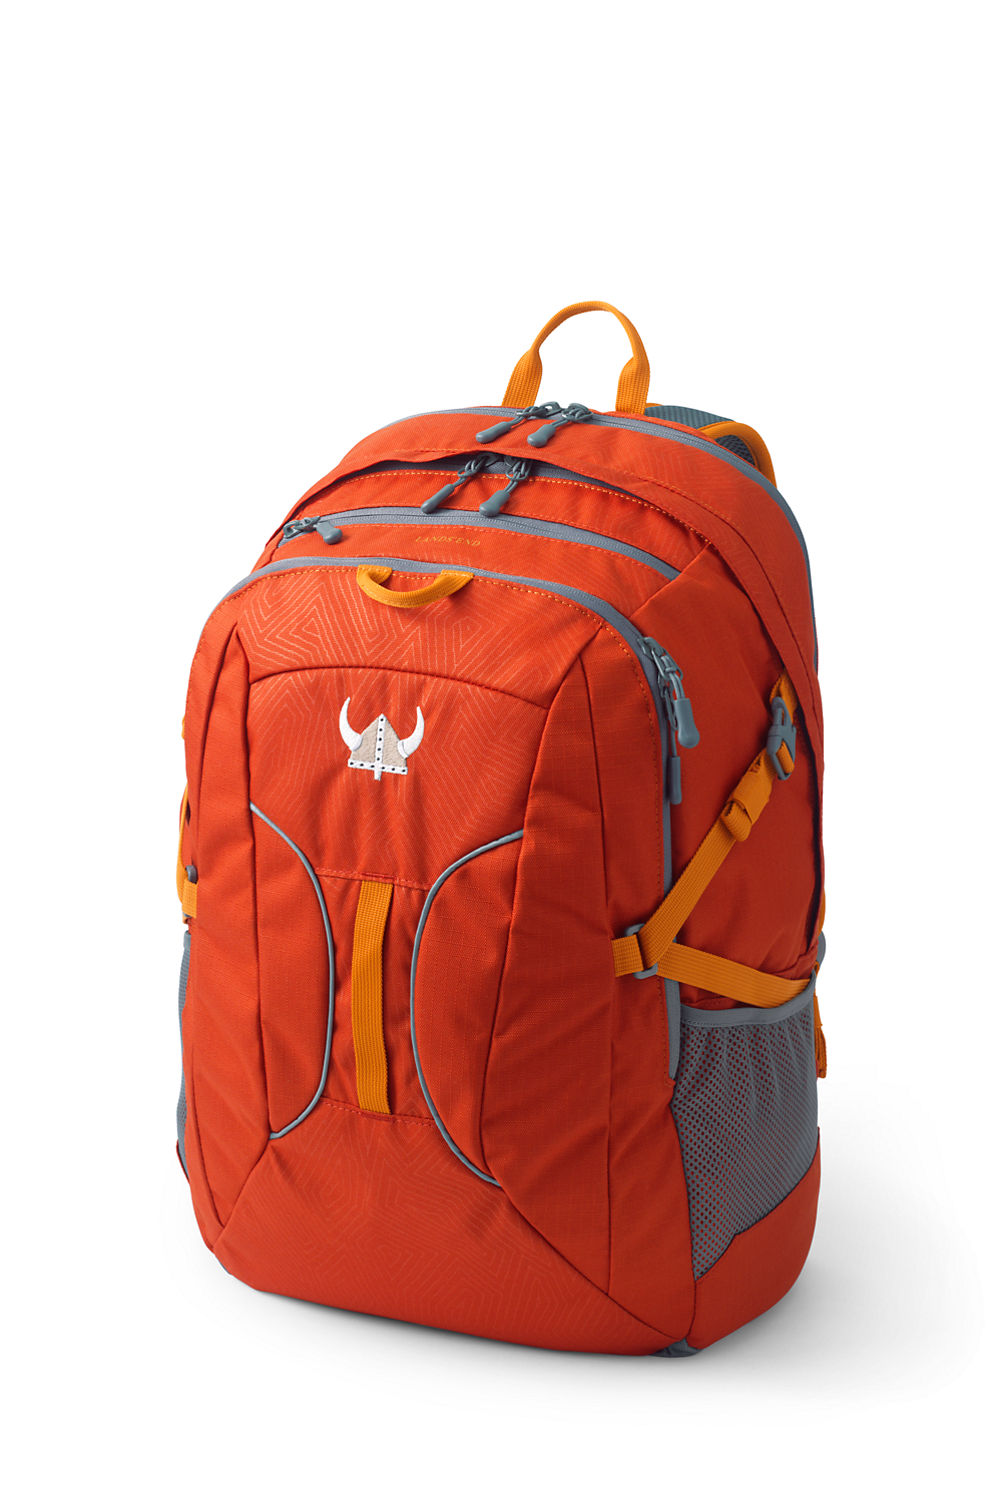 Big Backpacks For Middle Schoolers Ceagesp